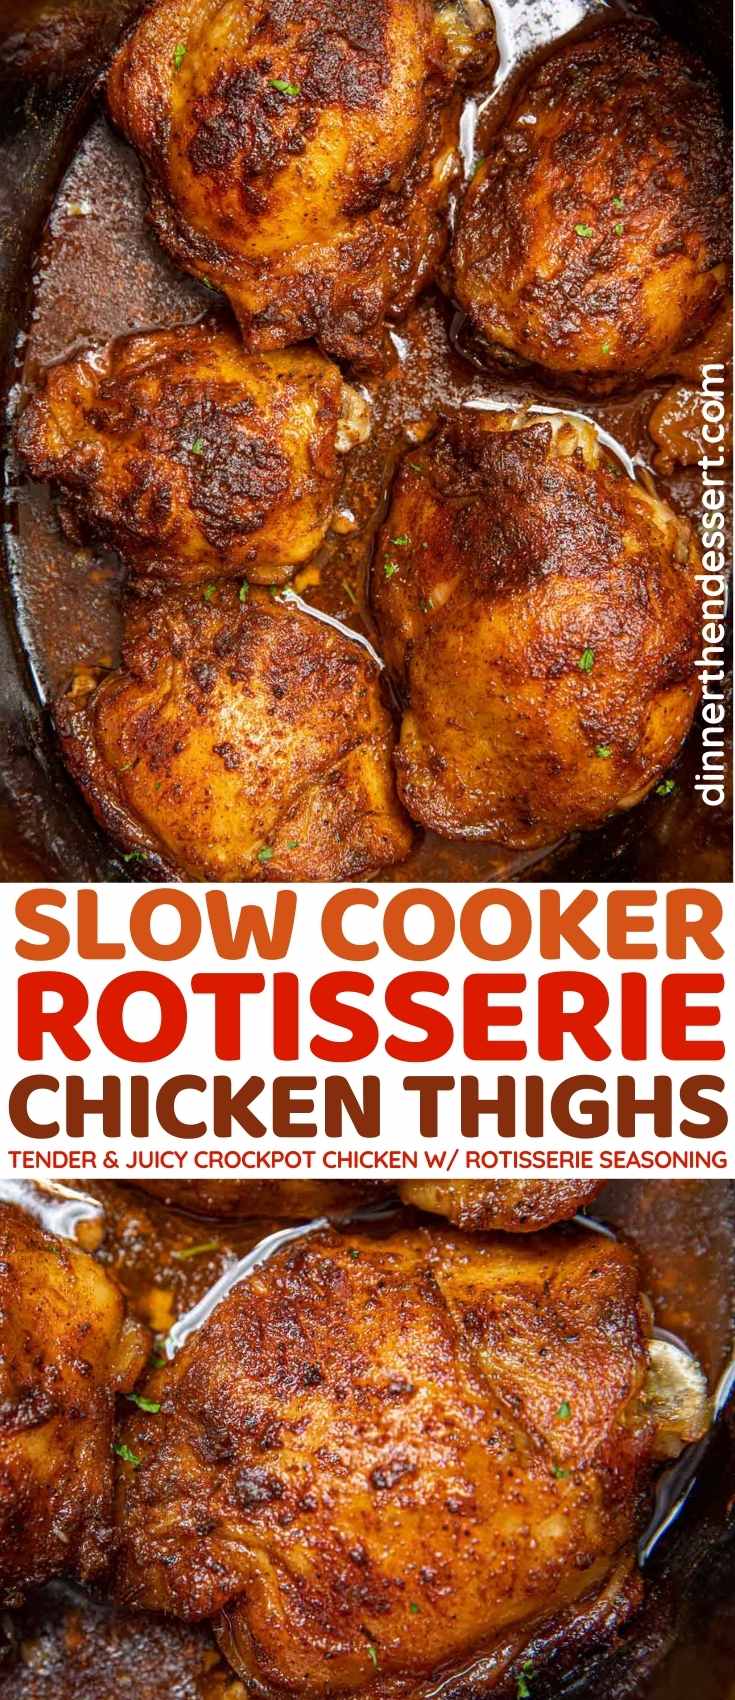 Slow Cooker Rotisserie Chicken Thighs collage